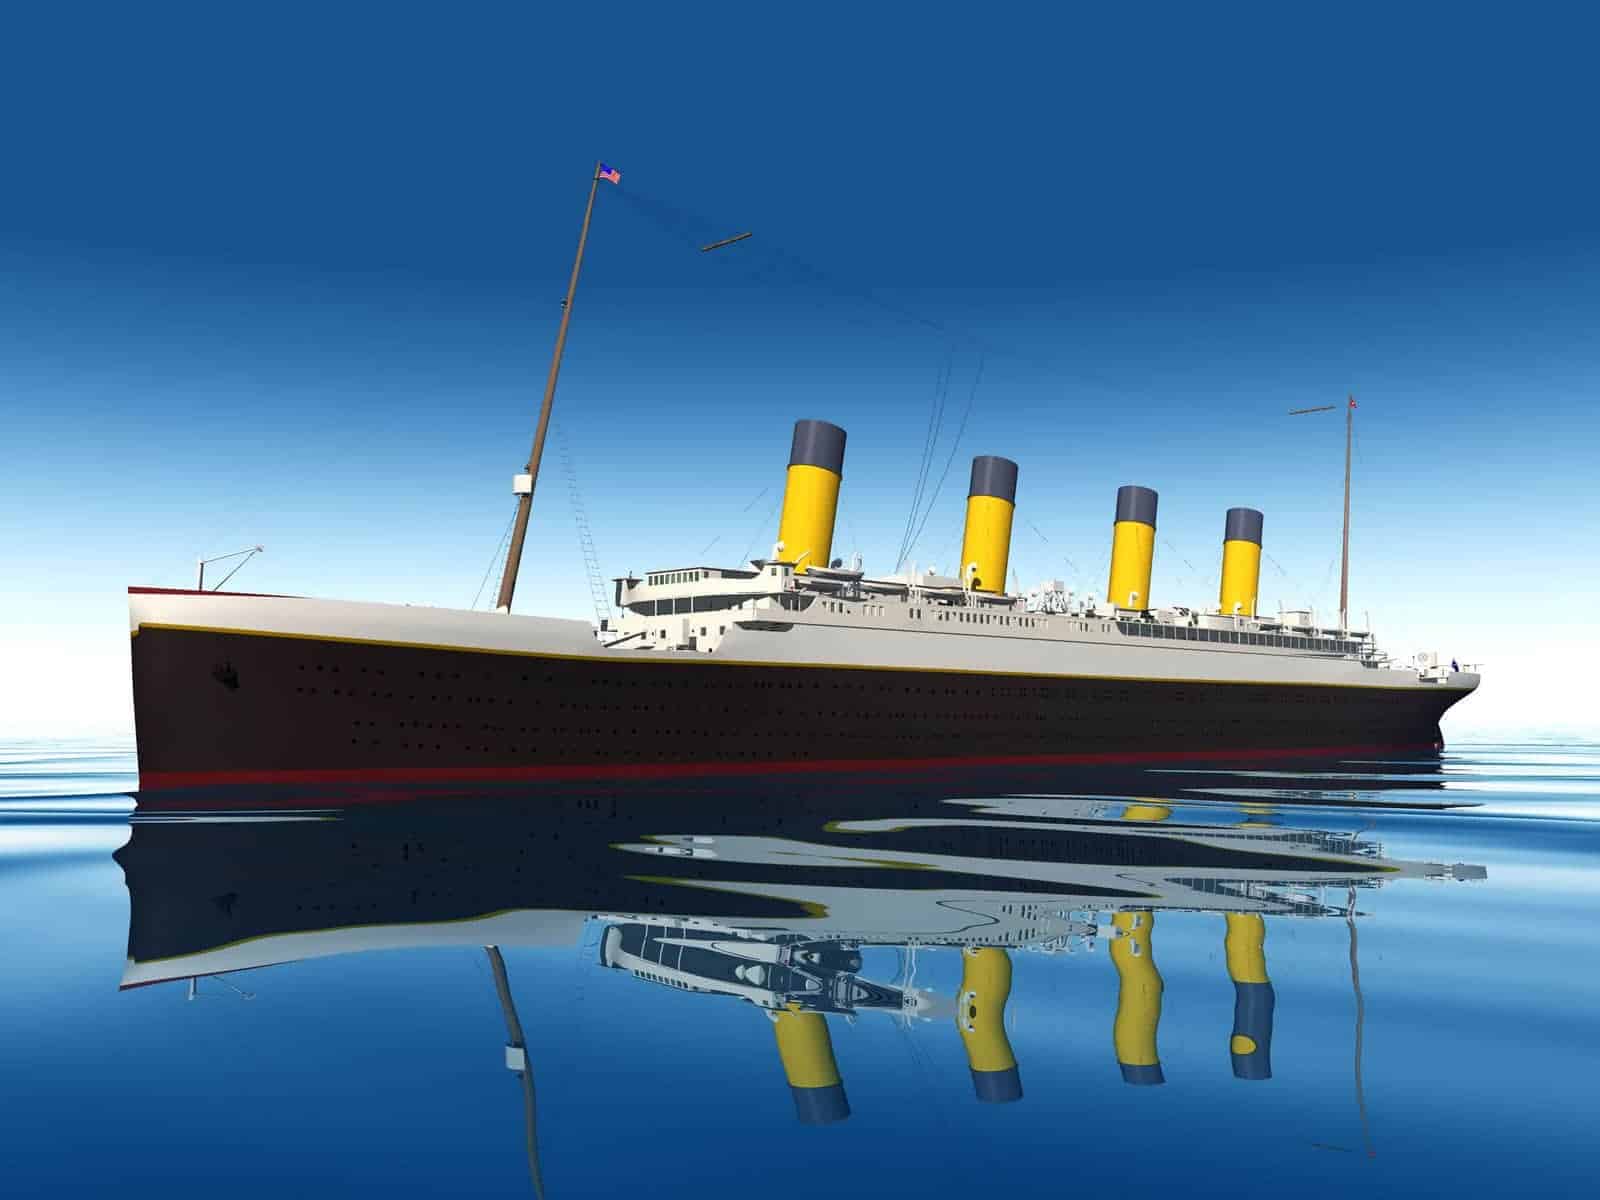 Model of Titanic on the ocean